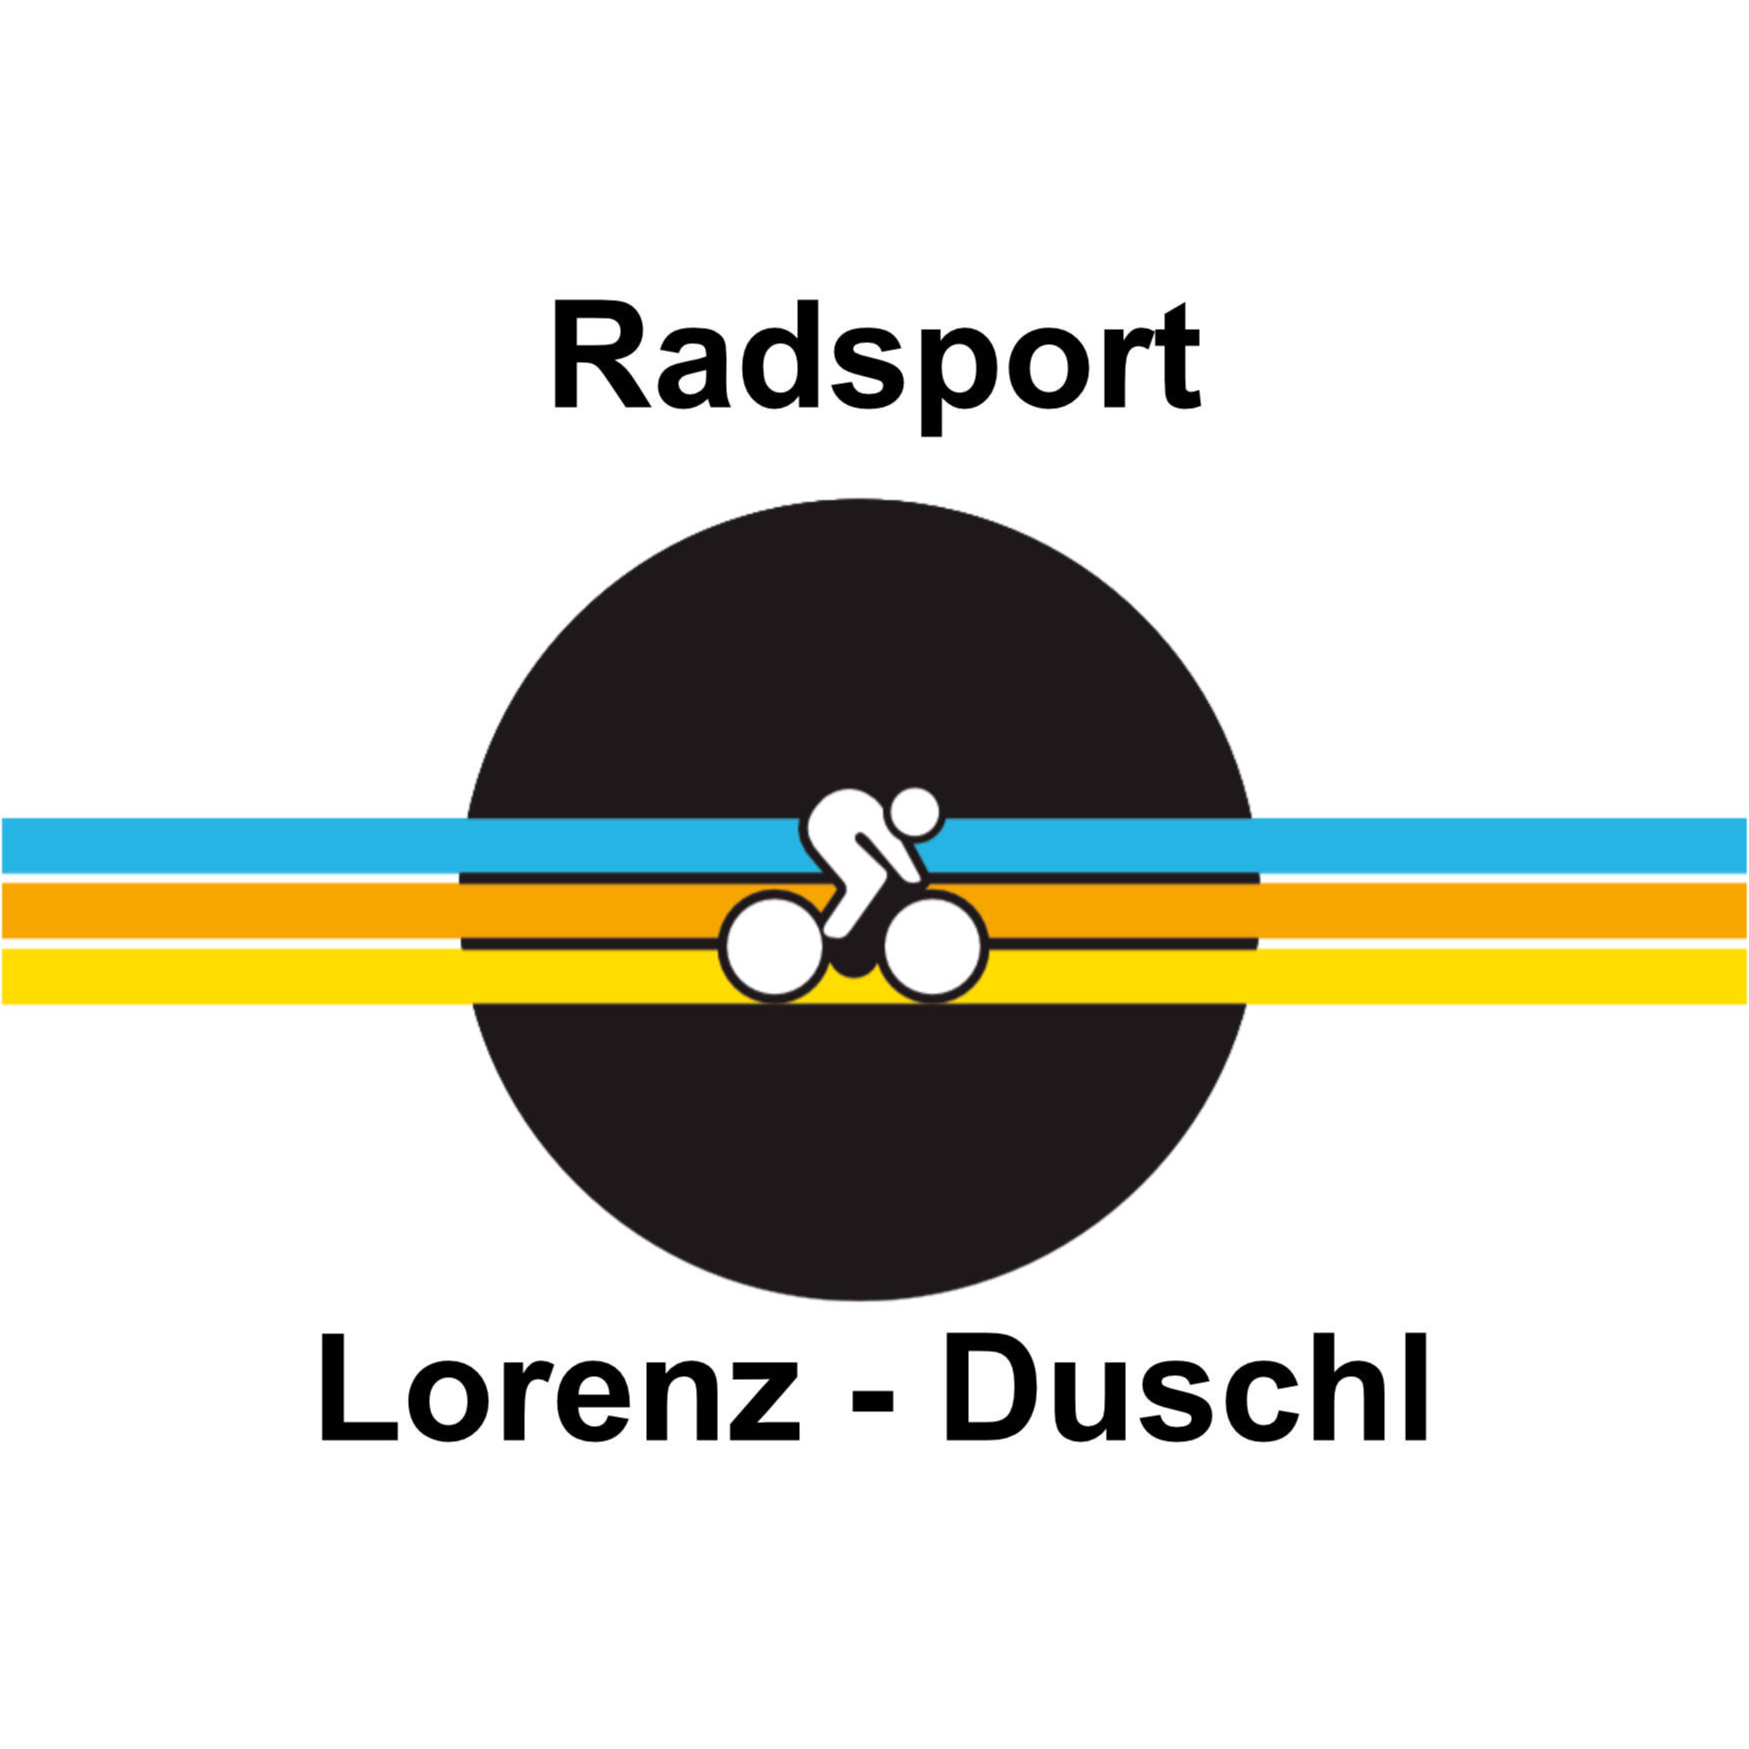 Radsport Duschl - R. Lorenz in Nürnberg - Logo